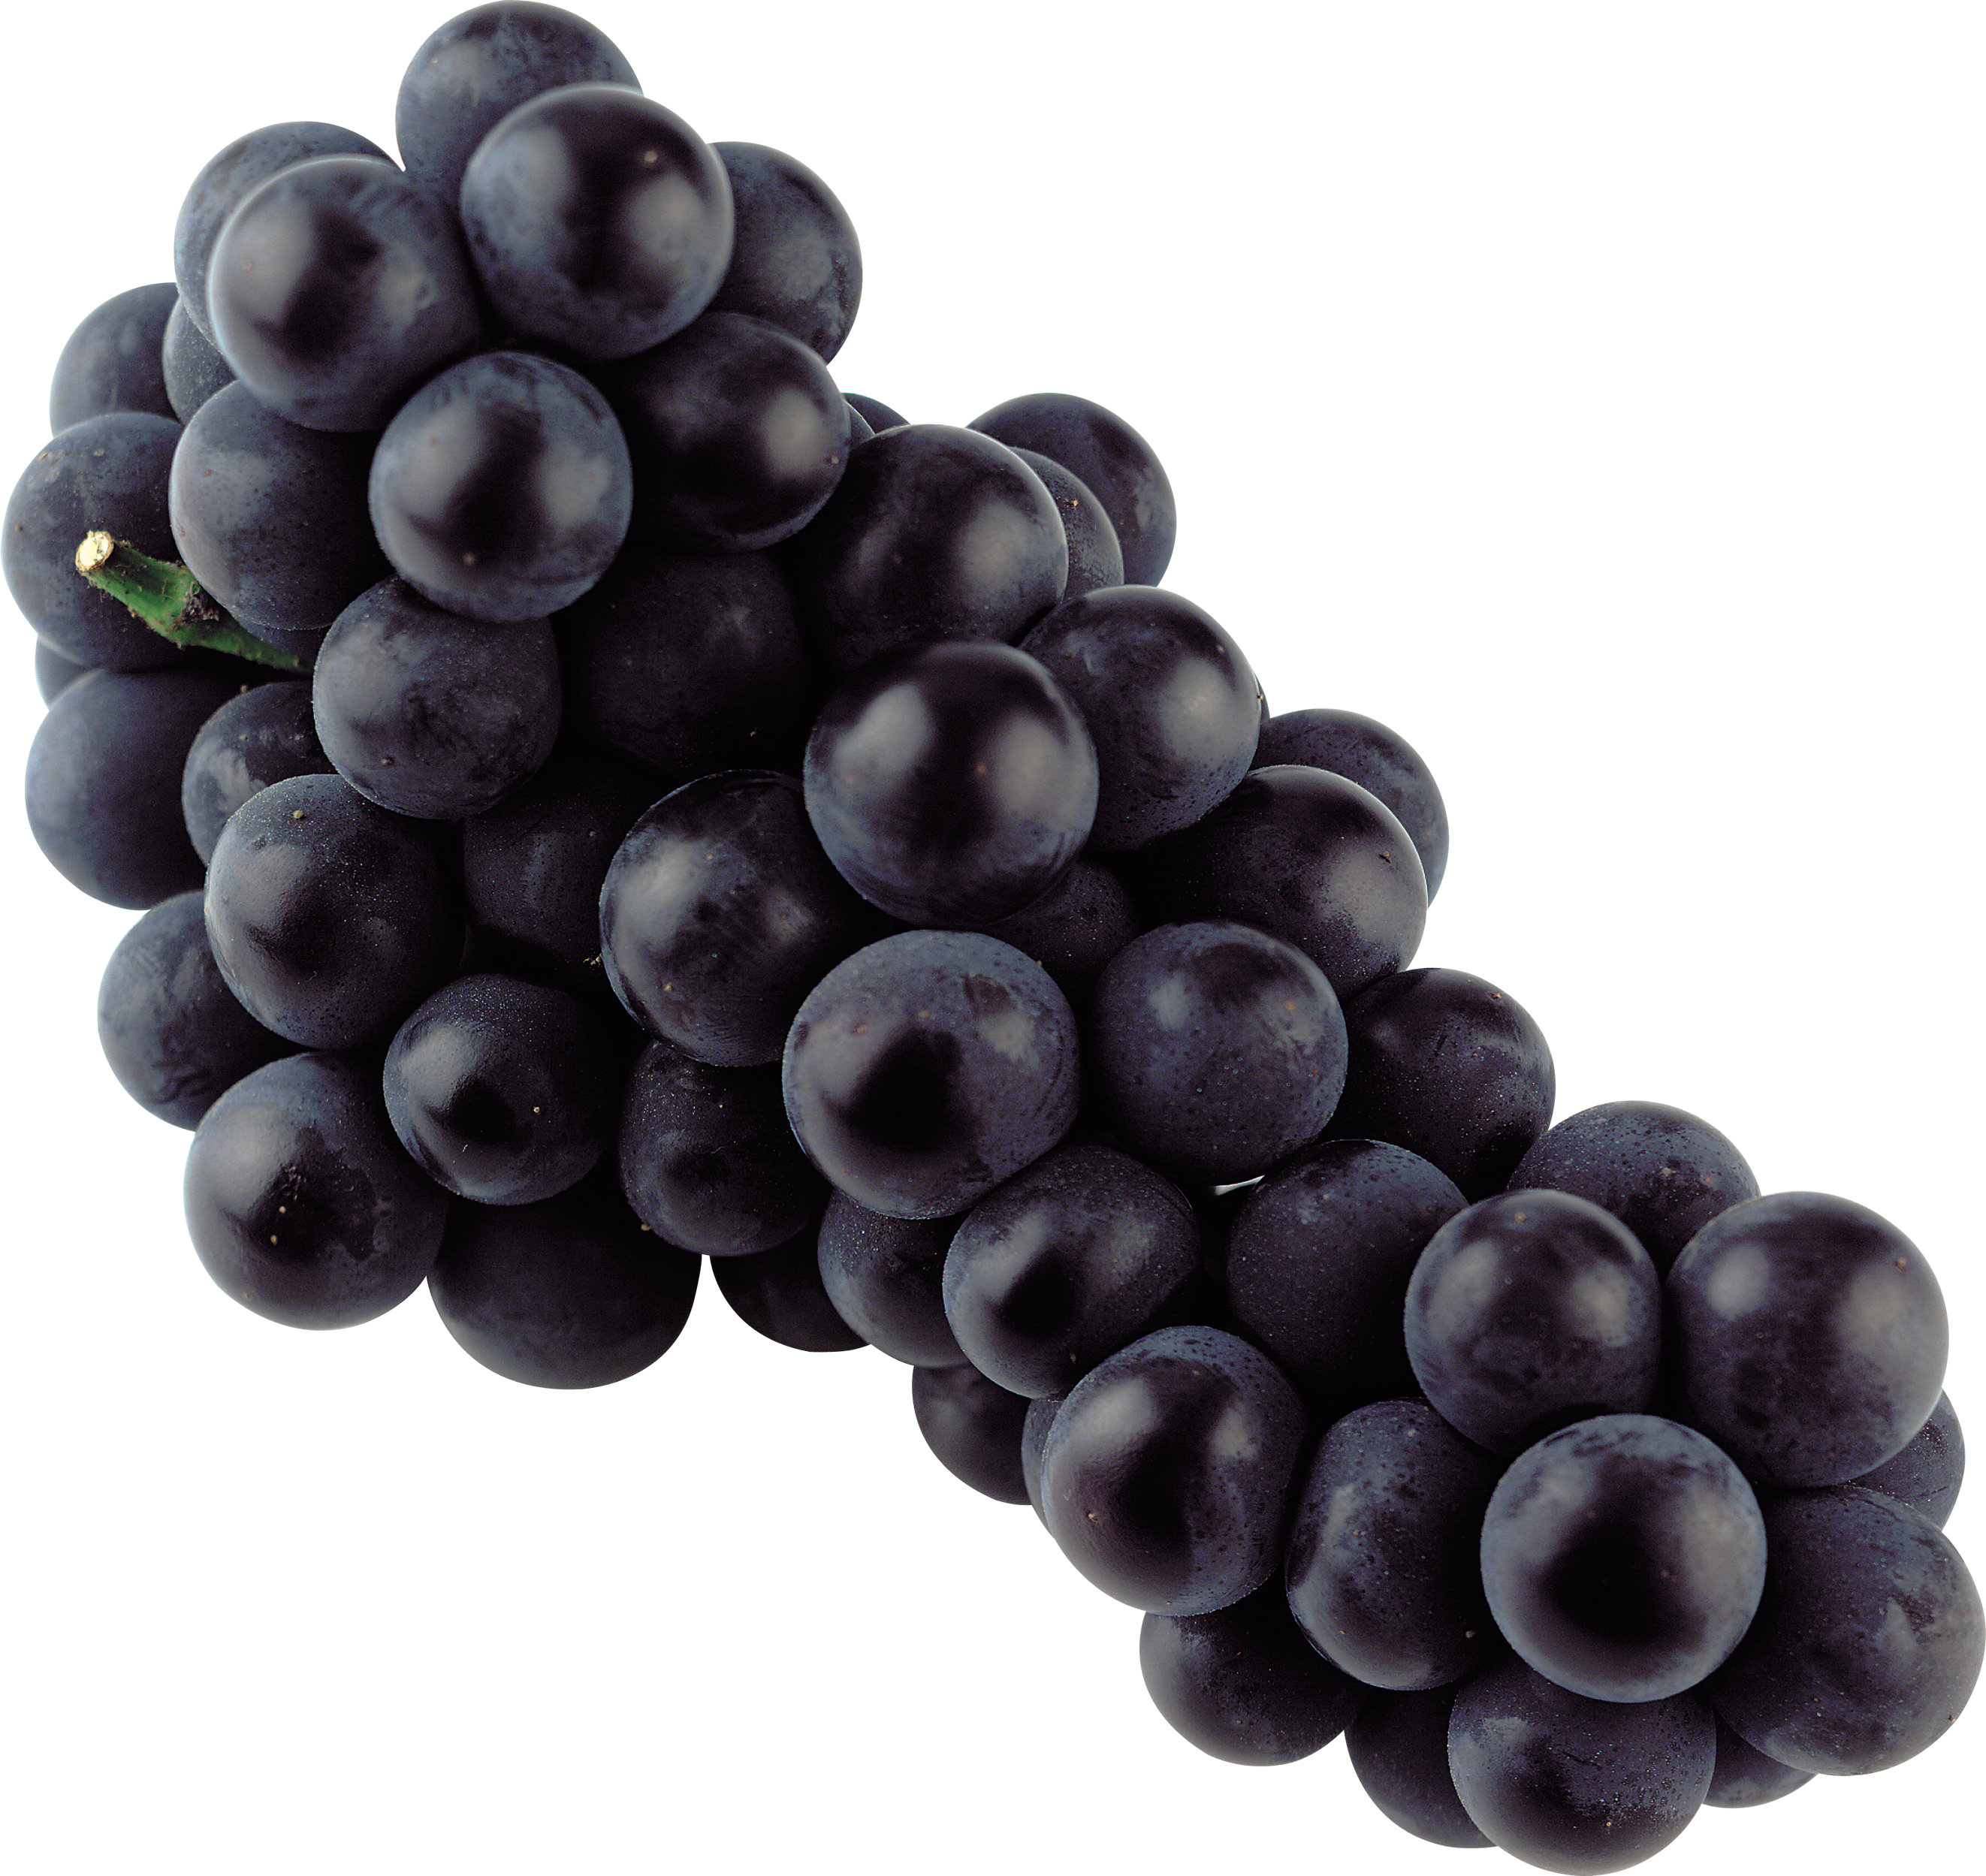 Black grape PNG image